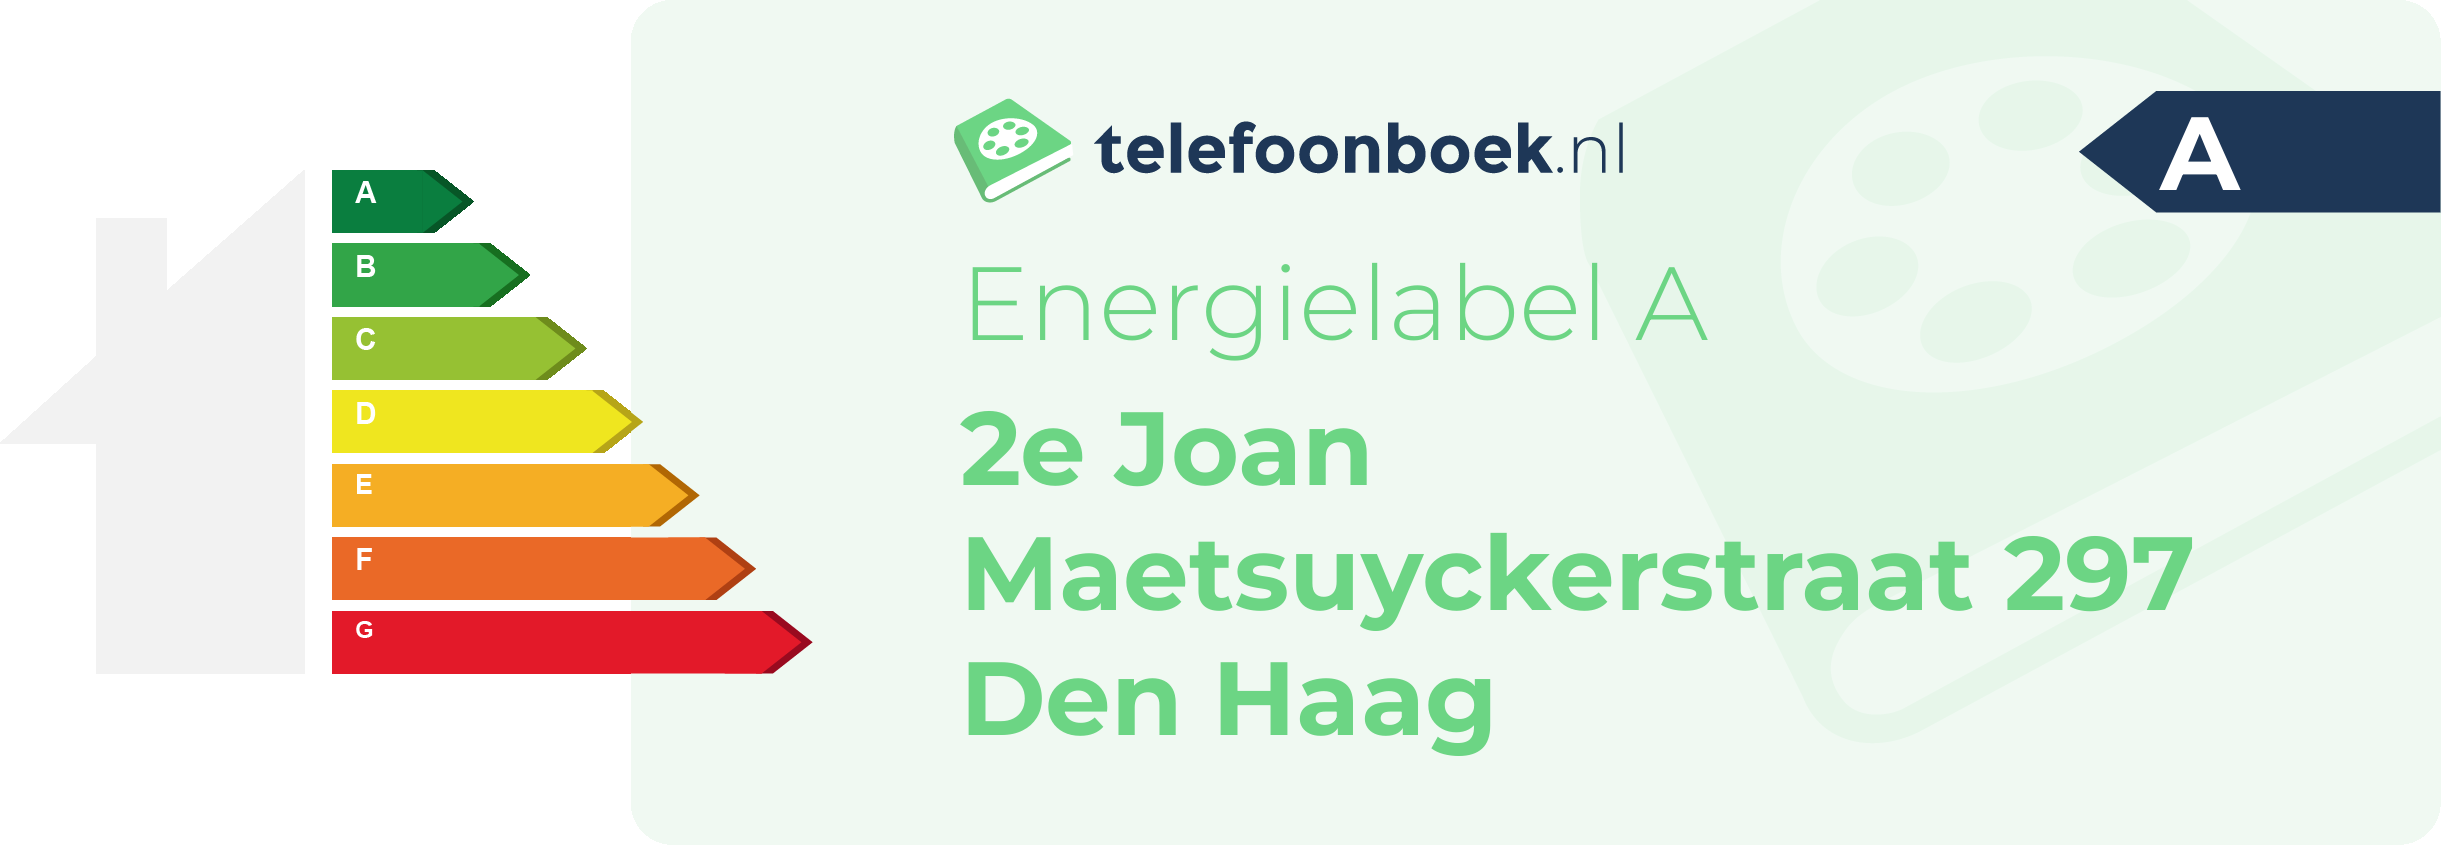 Energielabel 2e Joan Maetsuyckerstraat 297 Den Haag